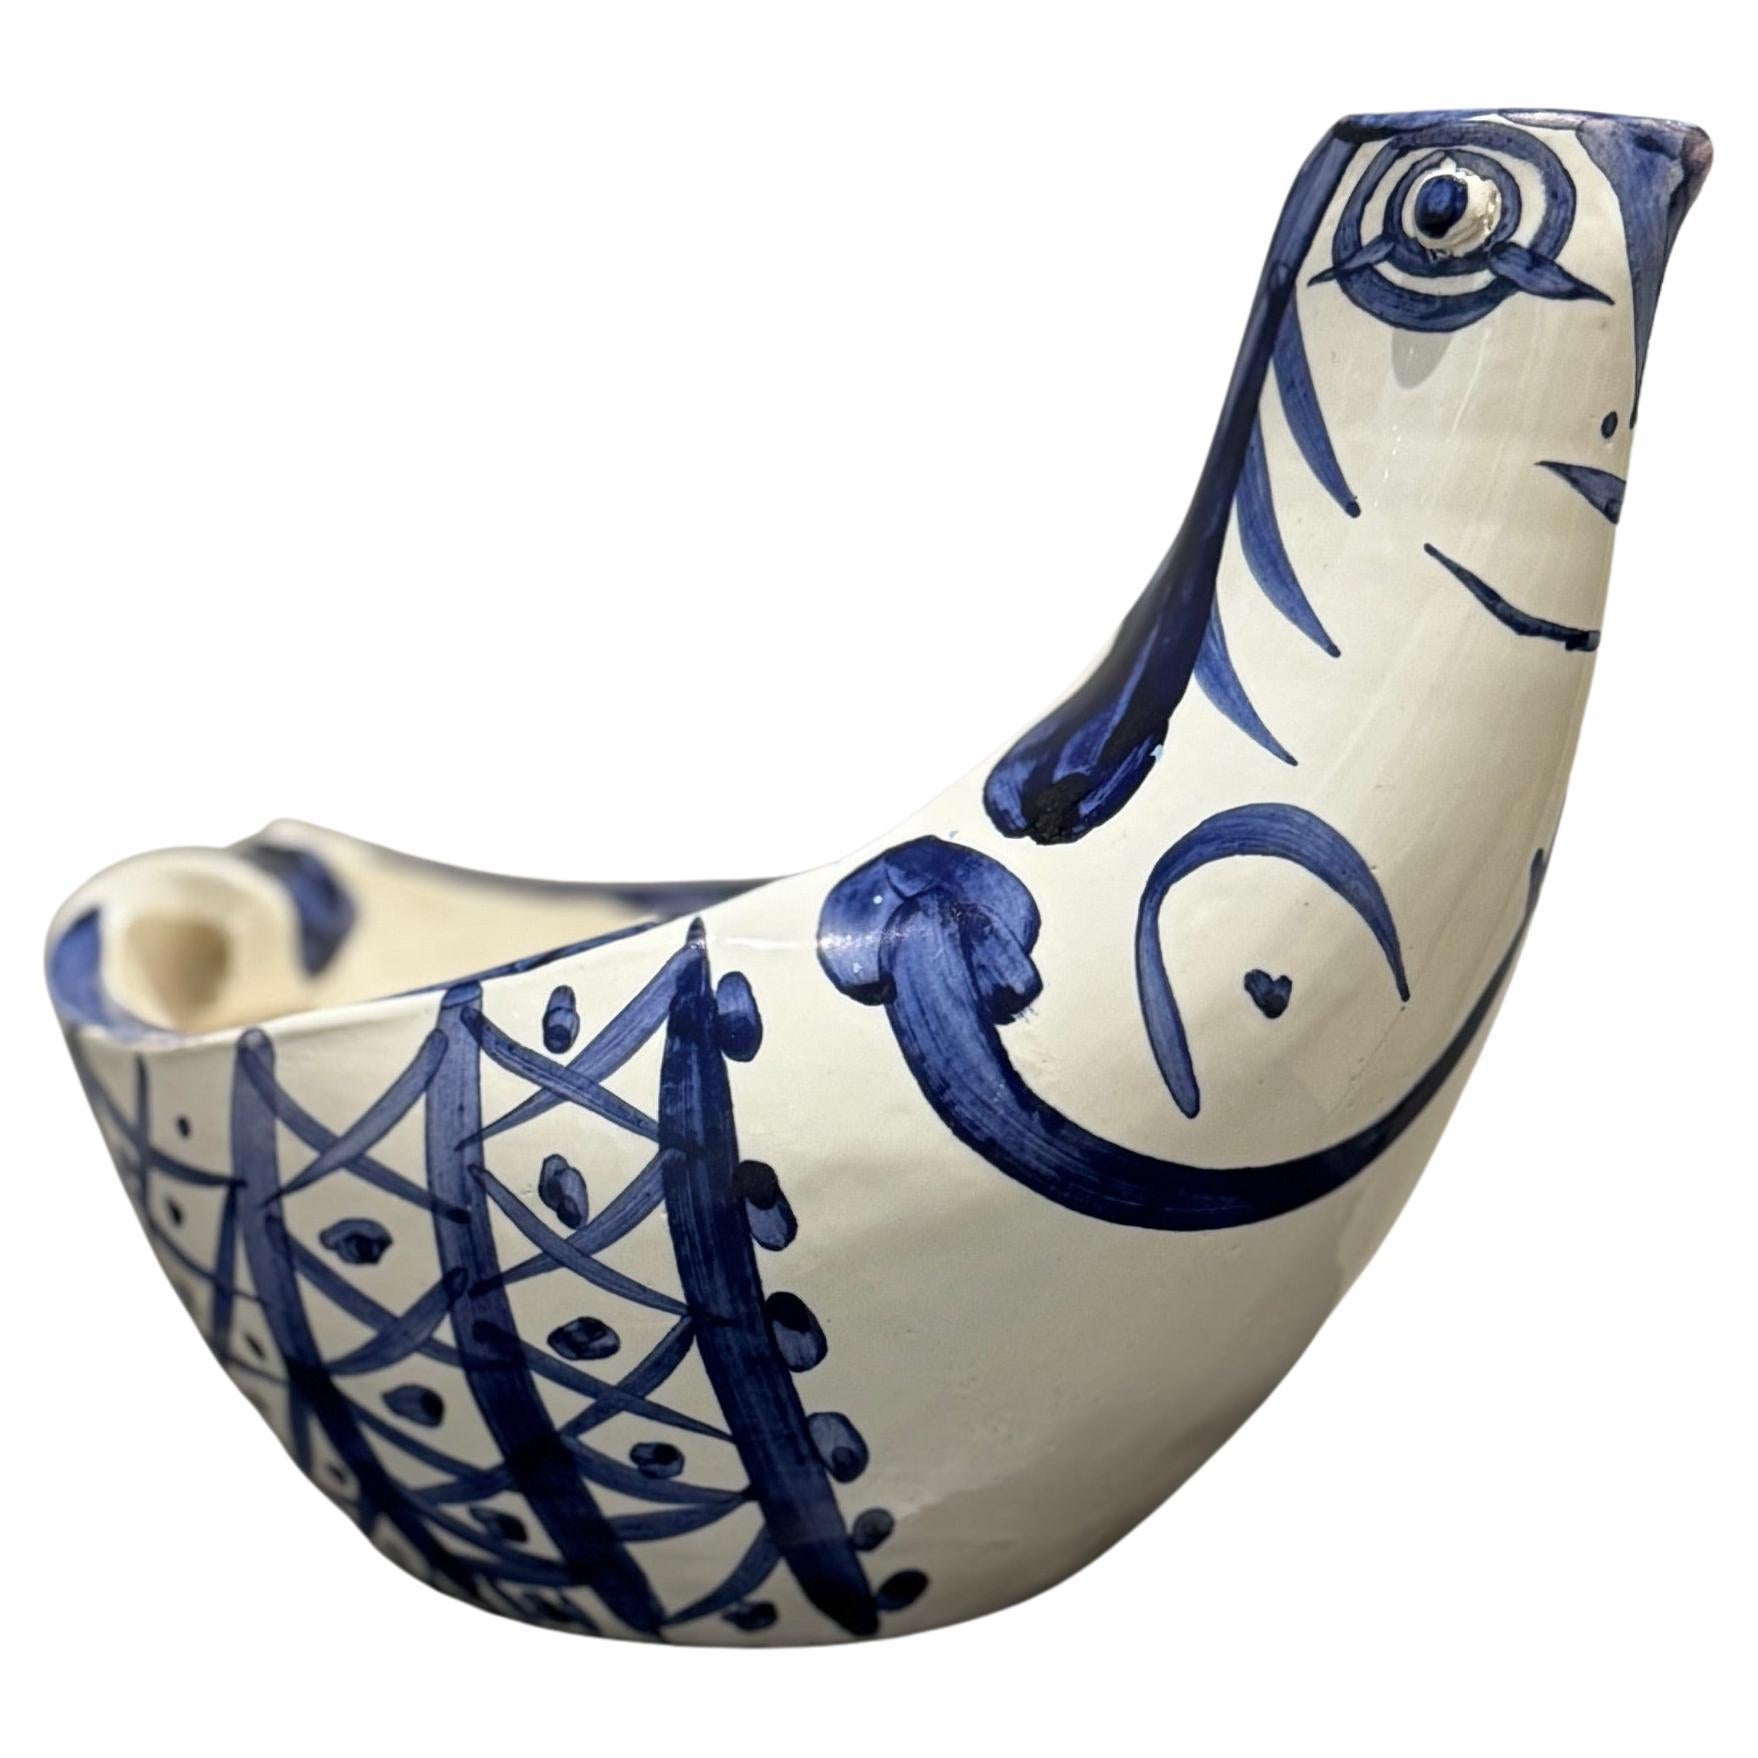 Pablo Picasso Ceramic Edition Madoura , Sujet poule 1954 For Sale